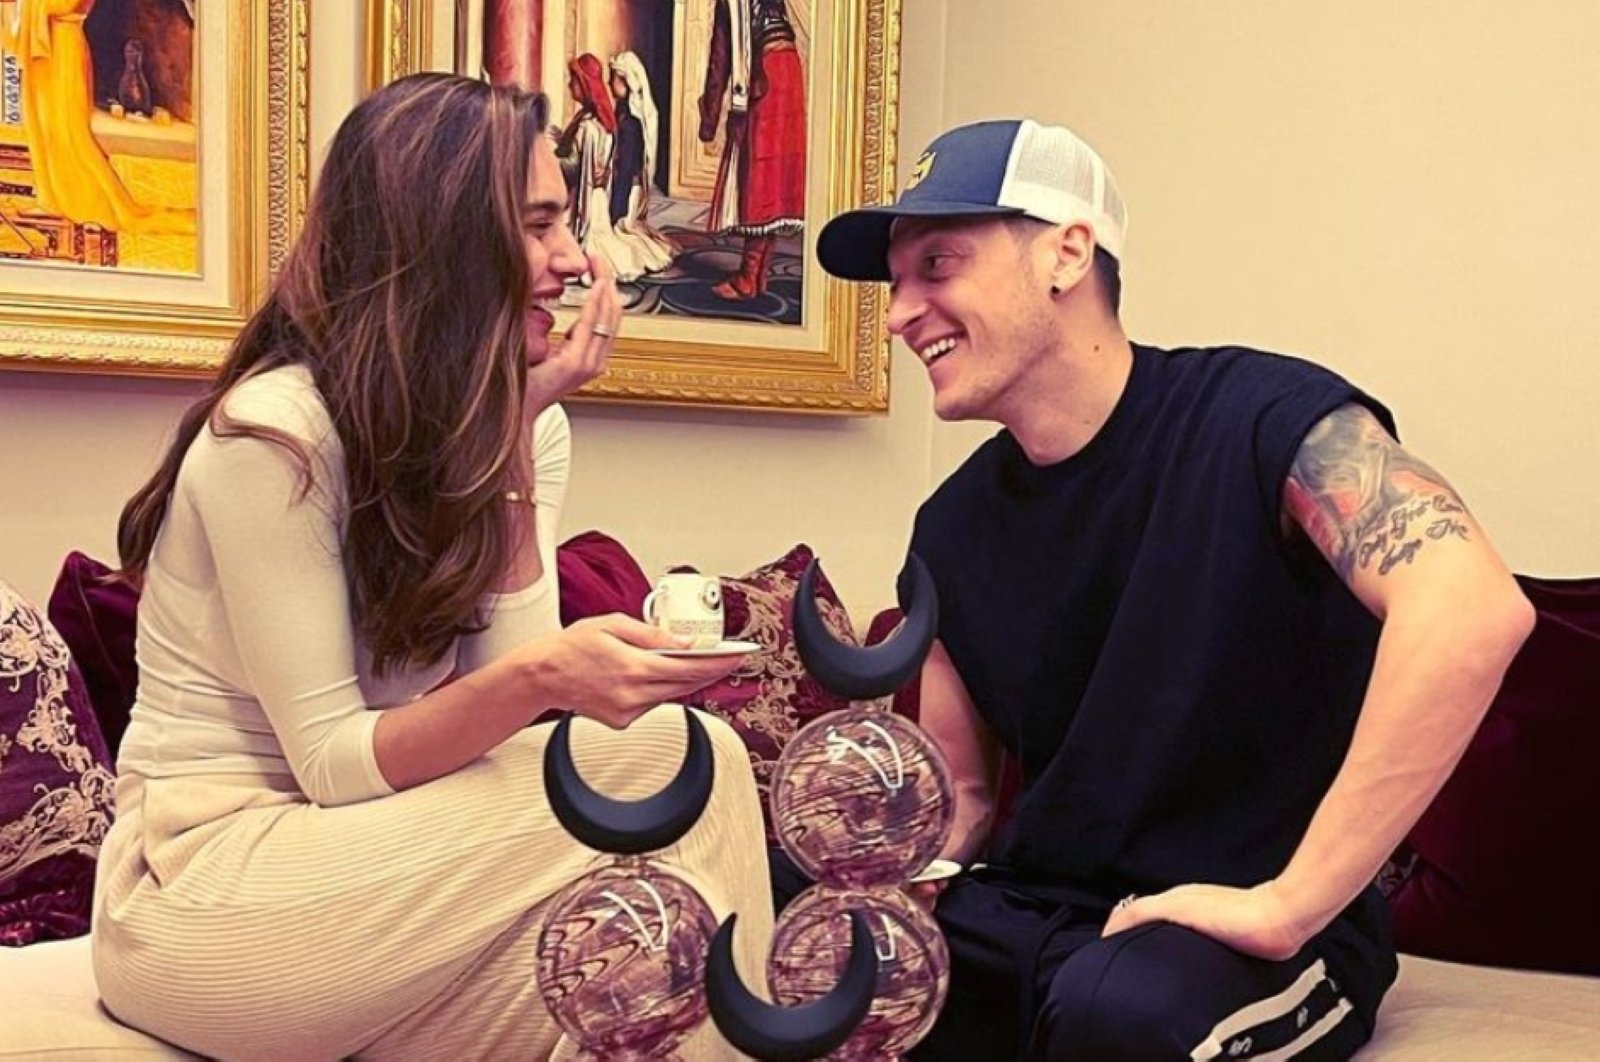 Tujuan pasangan: Mesut Özil berbagi penghargaan ulang tahun untuk istri Amine